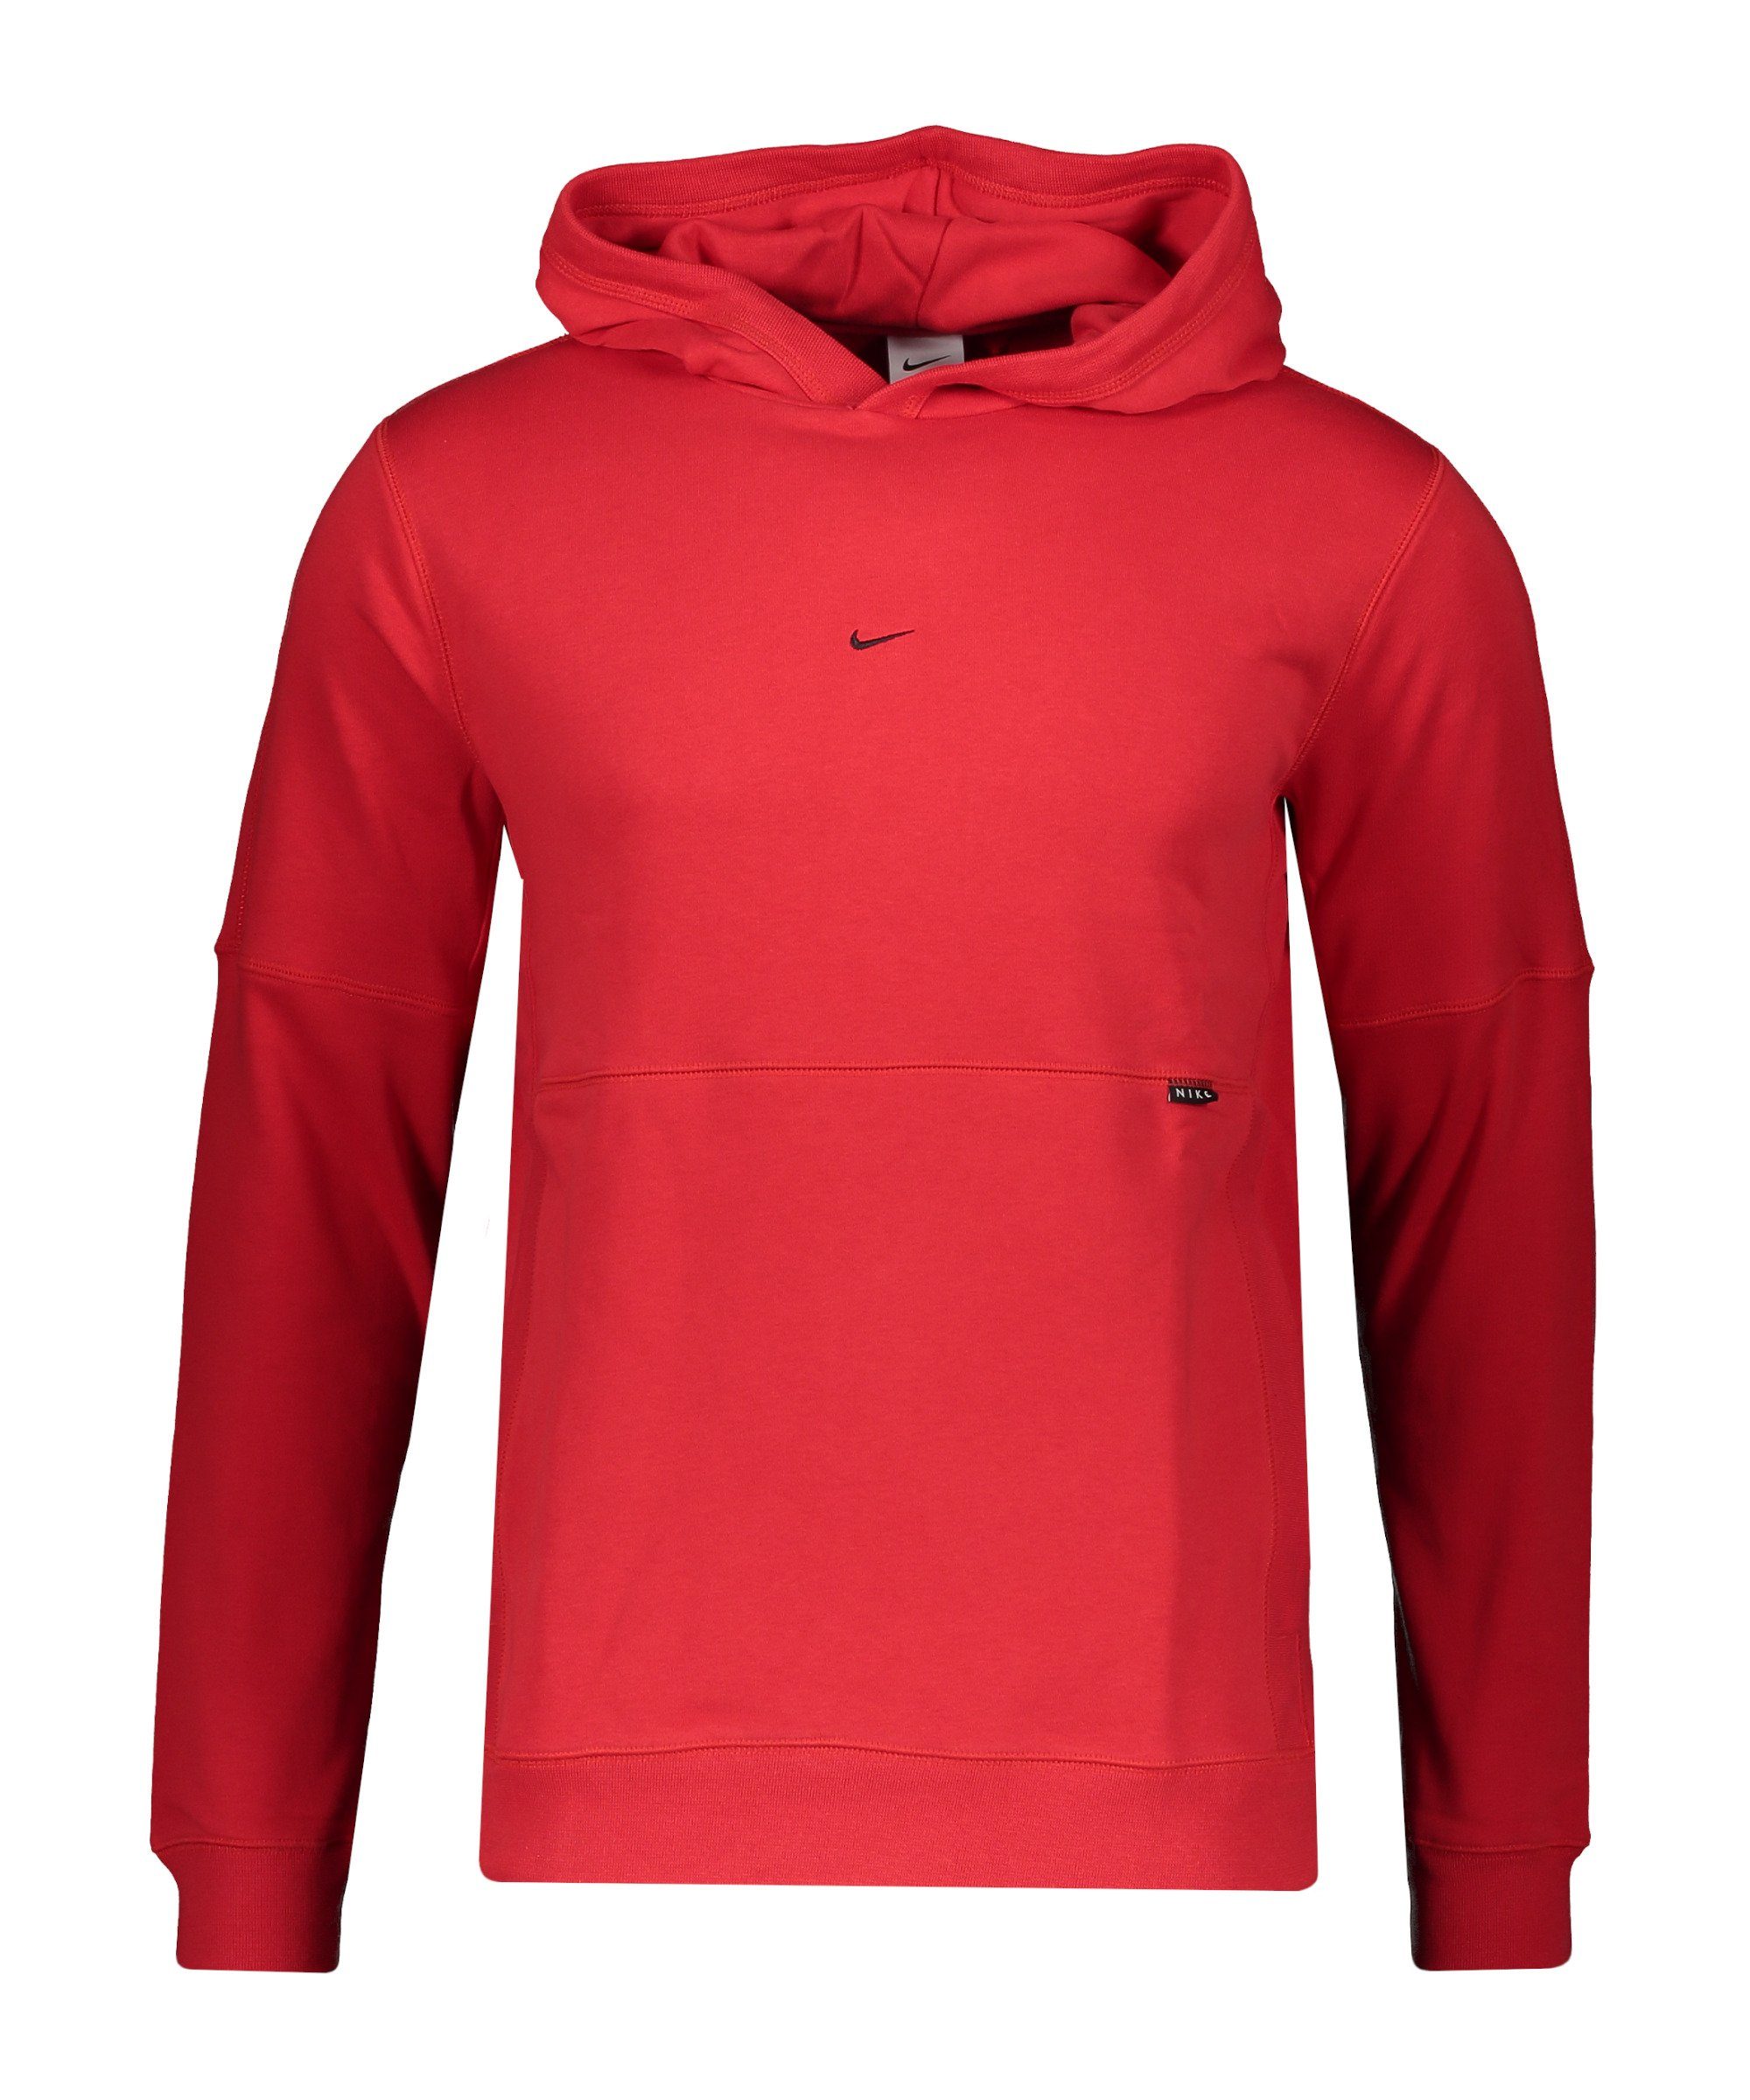 Herren Rosa online | Nike OTTO kaufen Sweatshirts